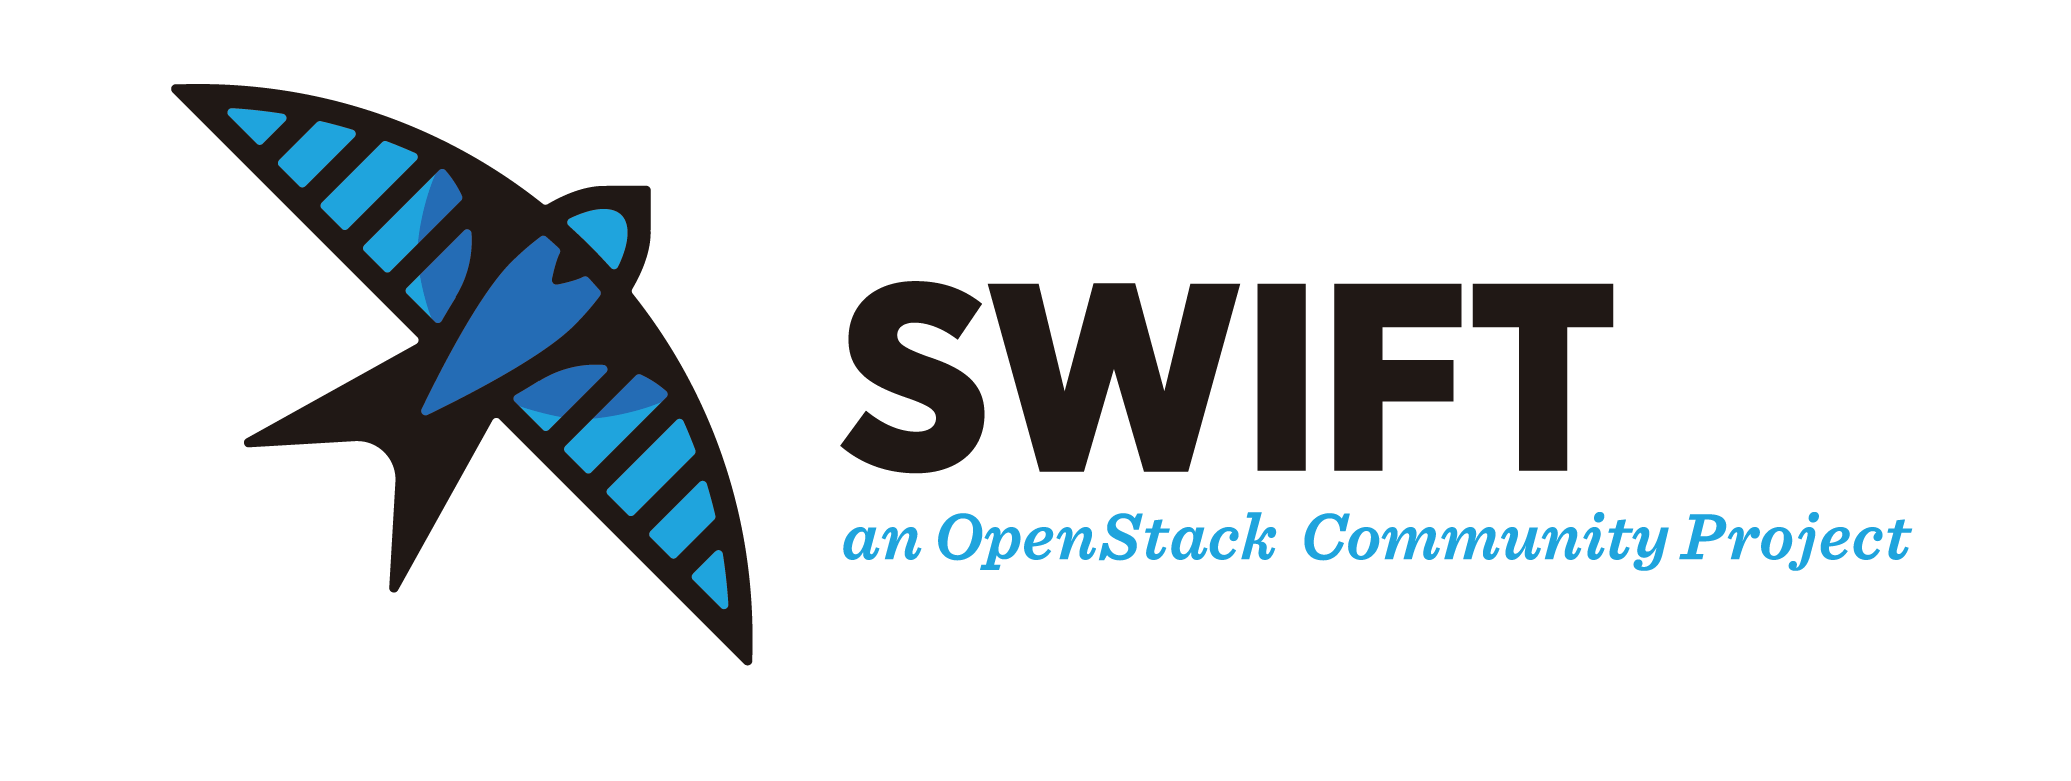 open-stack-swift-logo